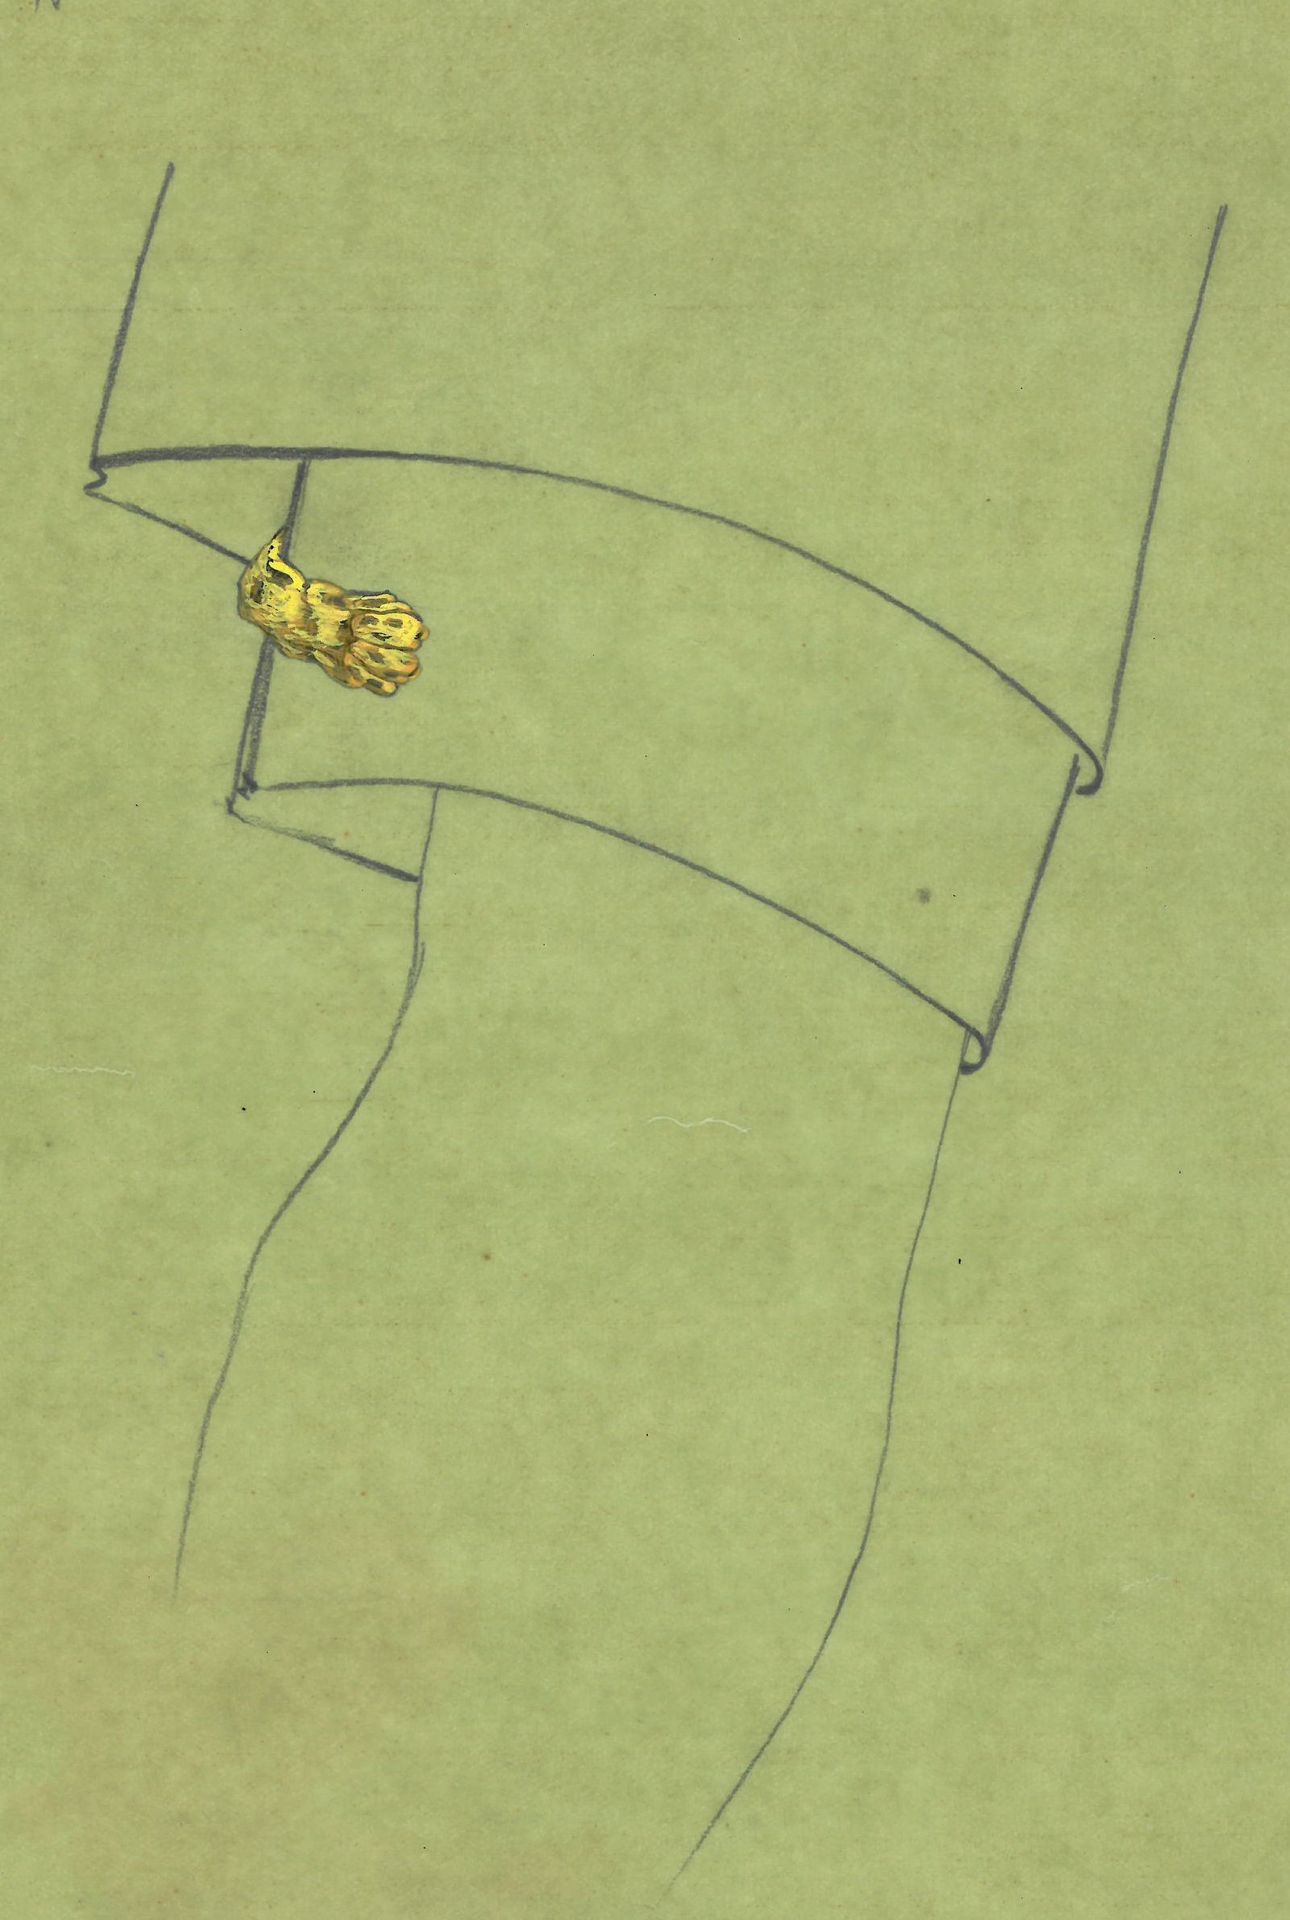 Null 孤独的人

黄金 "豹爪 "袖扣的项目。

绿色描图纸上的铅笔和水粉画。

尺寸：21 x 14厘米。

状态：描红上有一些非常轻微的痕迹。